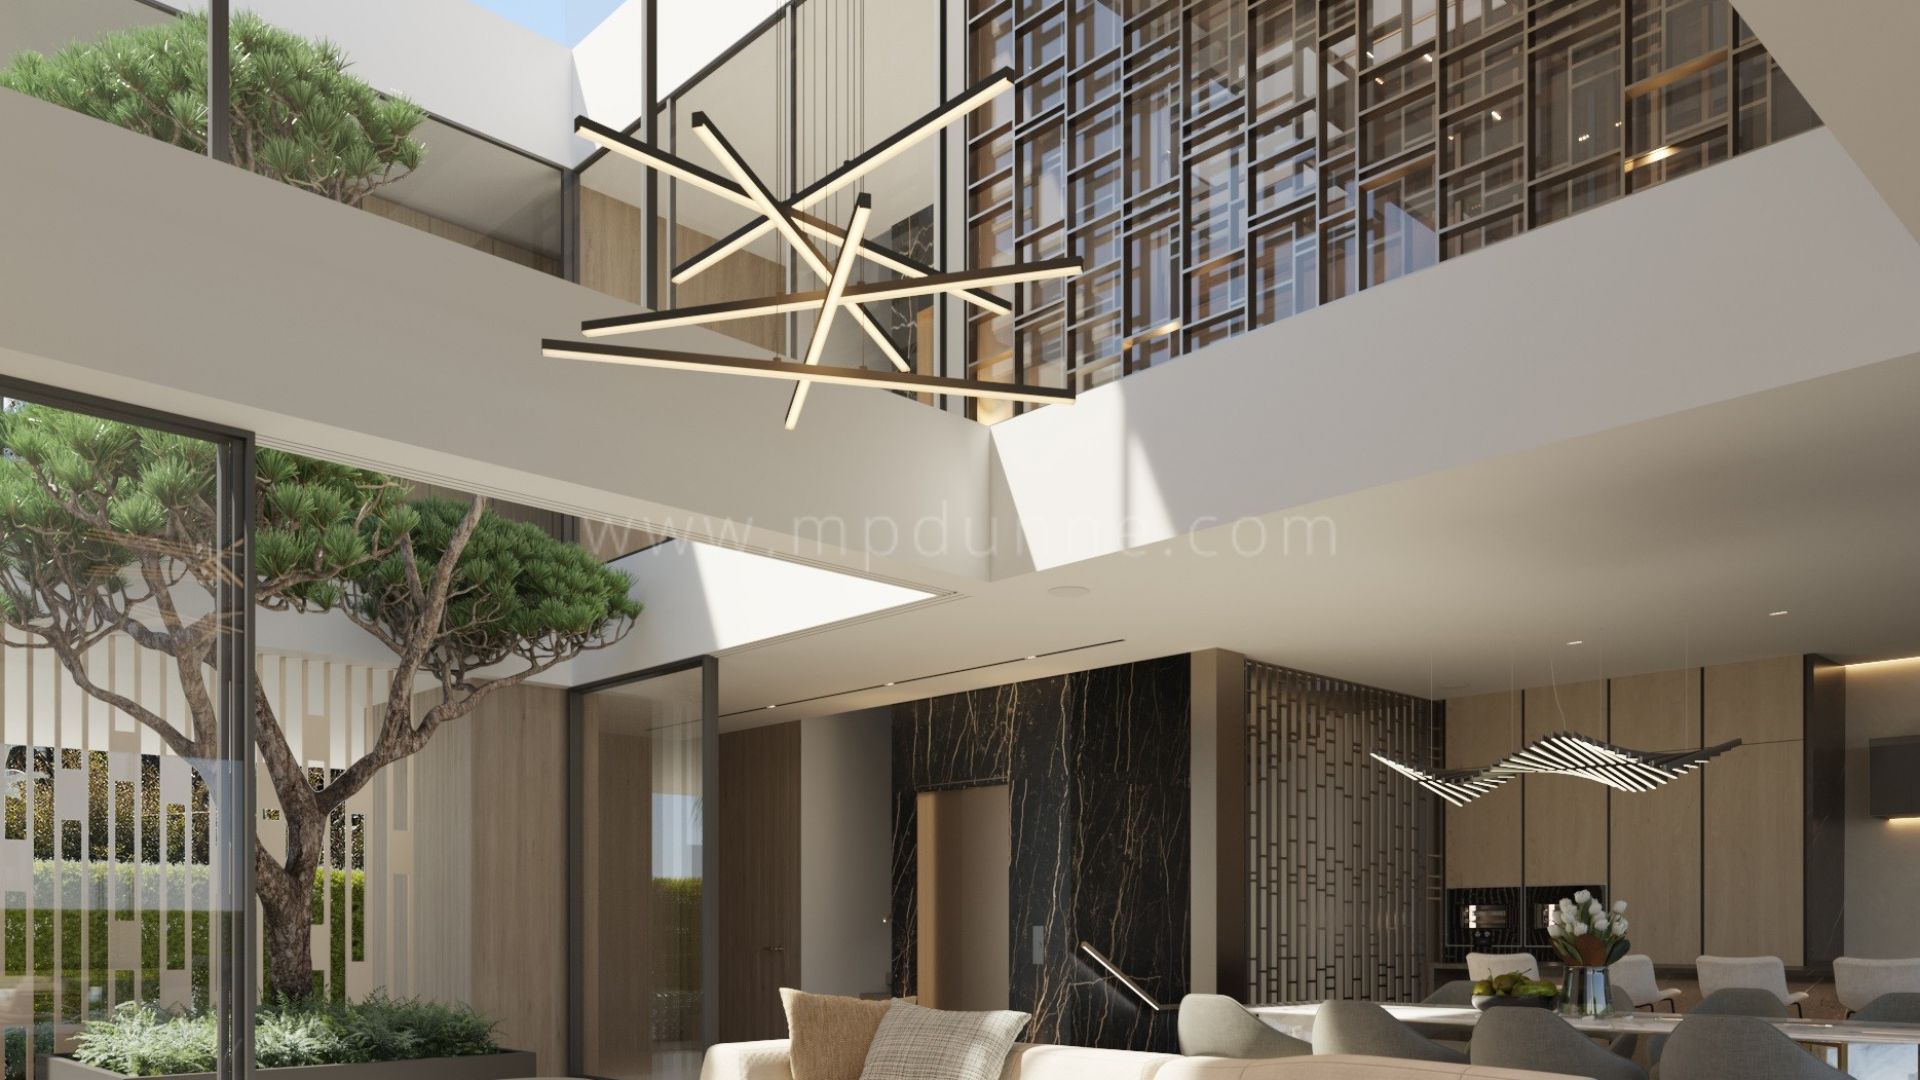 A new Project of Luxury Villas near Puerto Banus